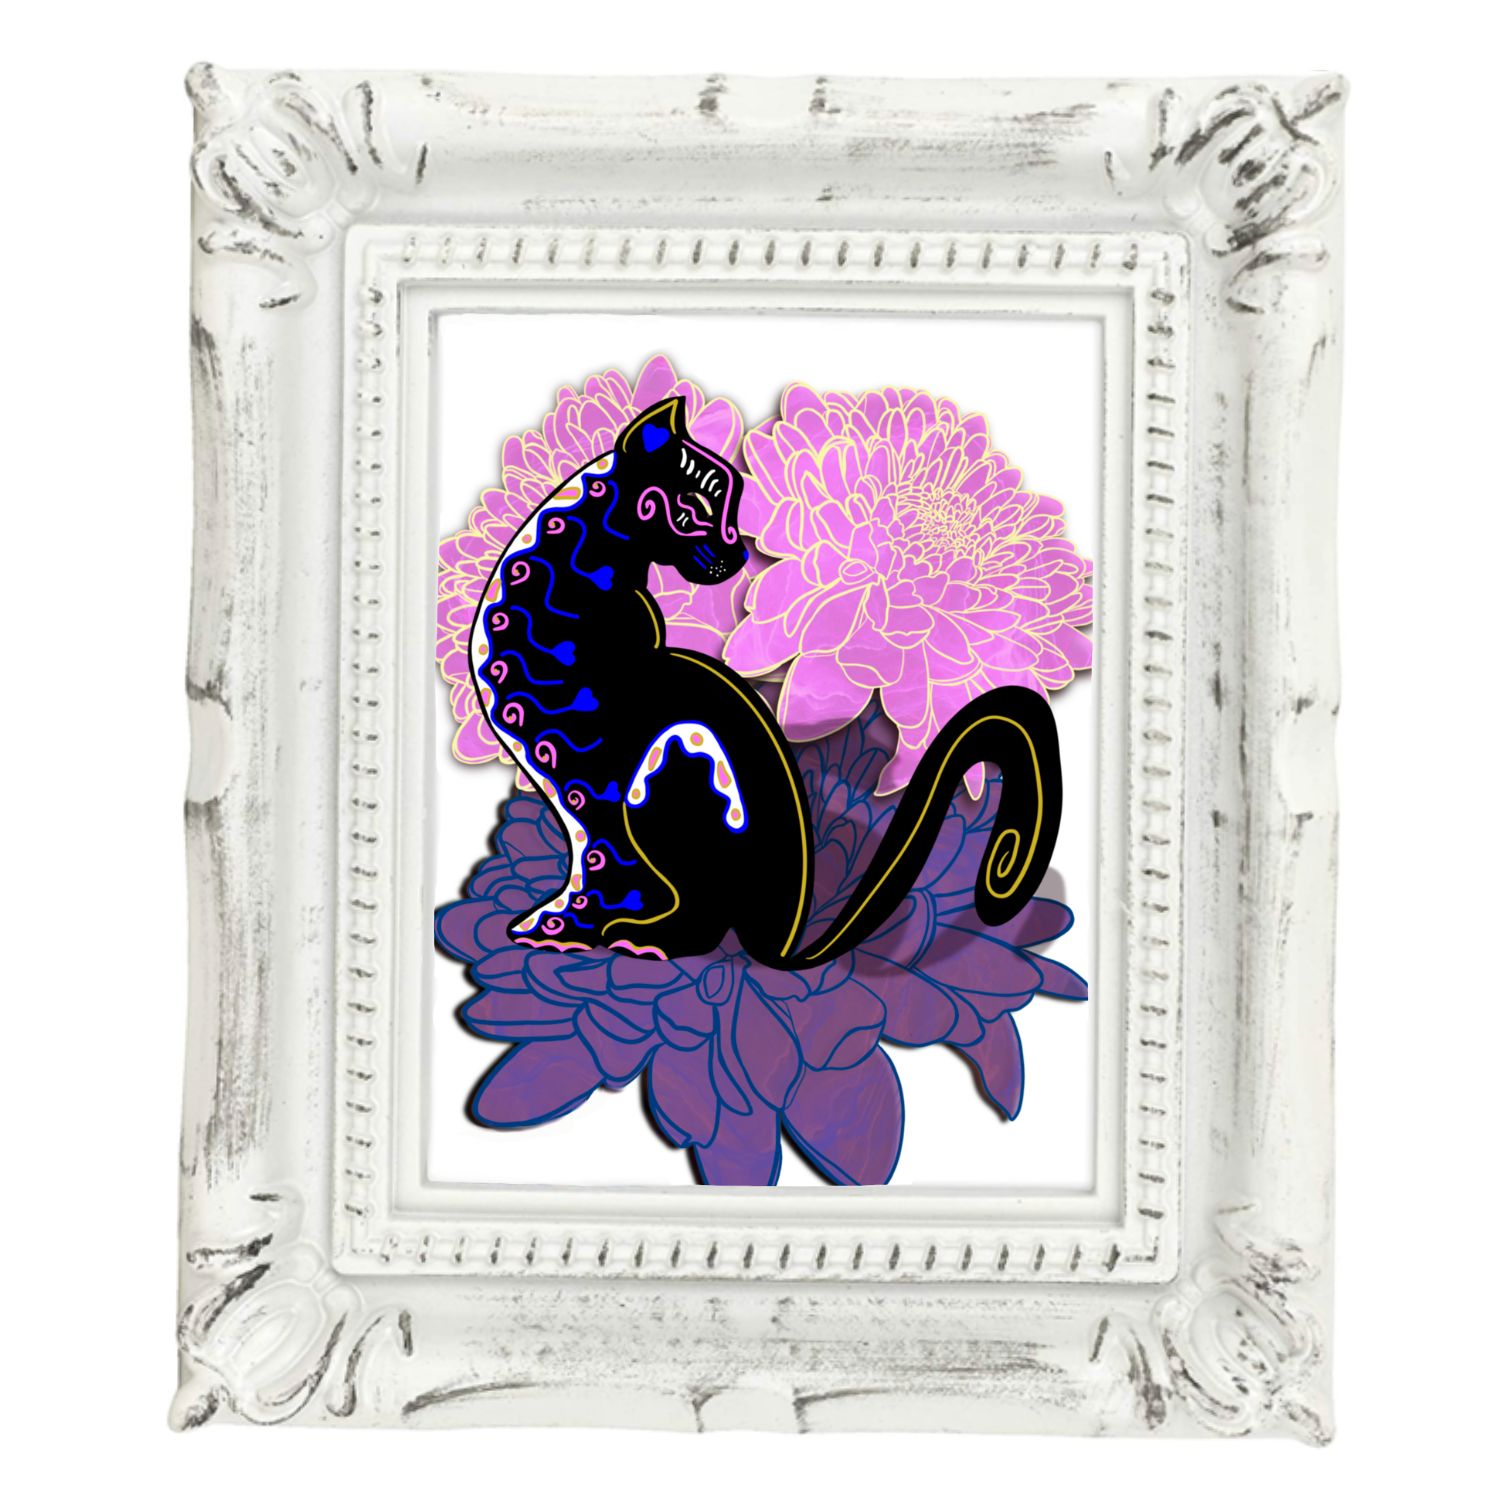 Neverending Stickers - Framed Mini Print - Dia De Los Muertos - Black Cat - 4x3.5 in Frame -